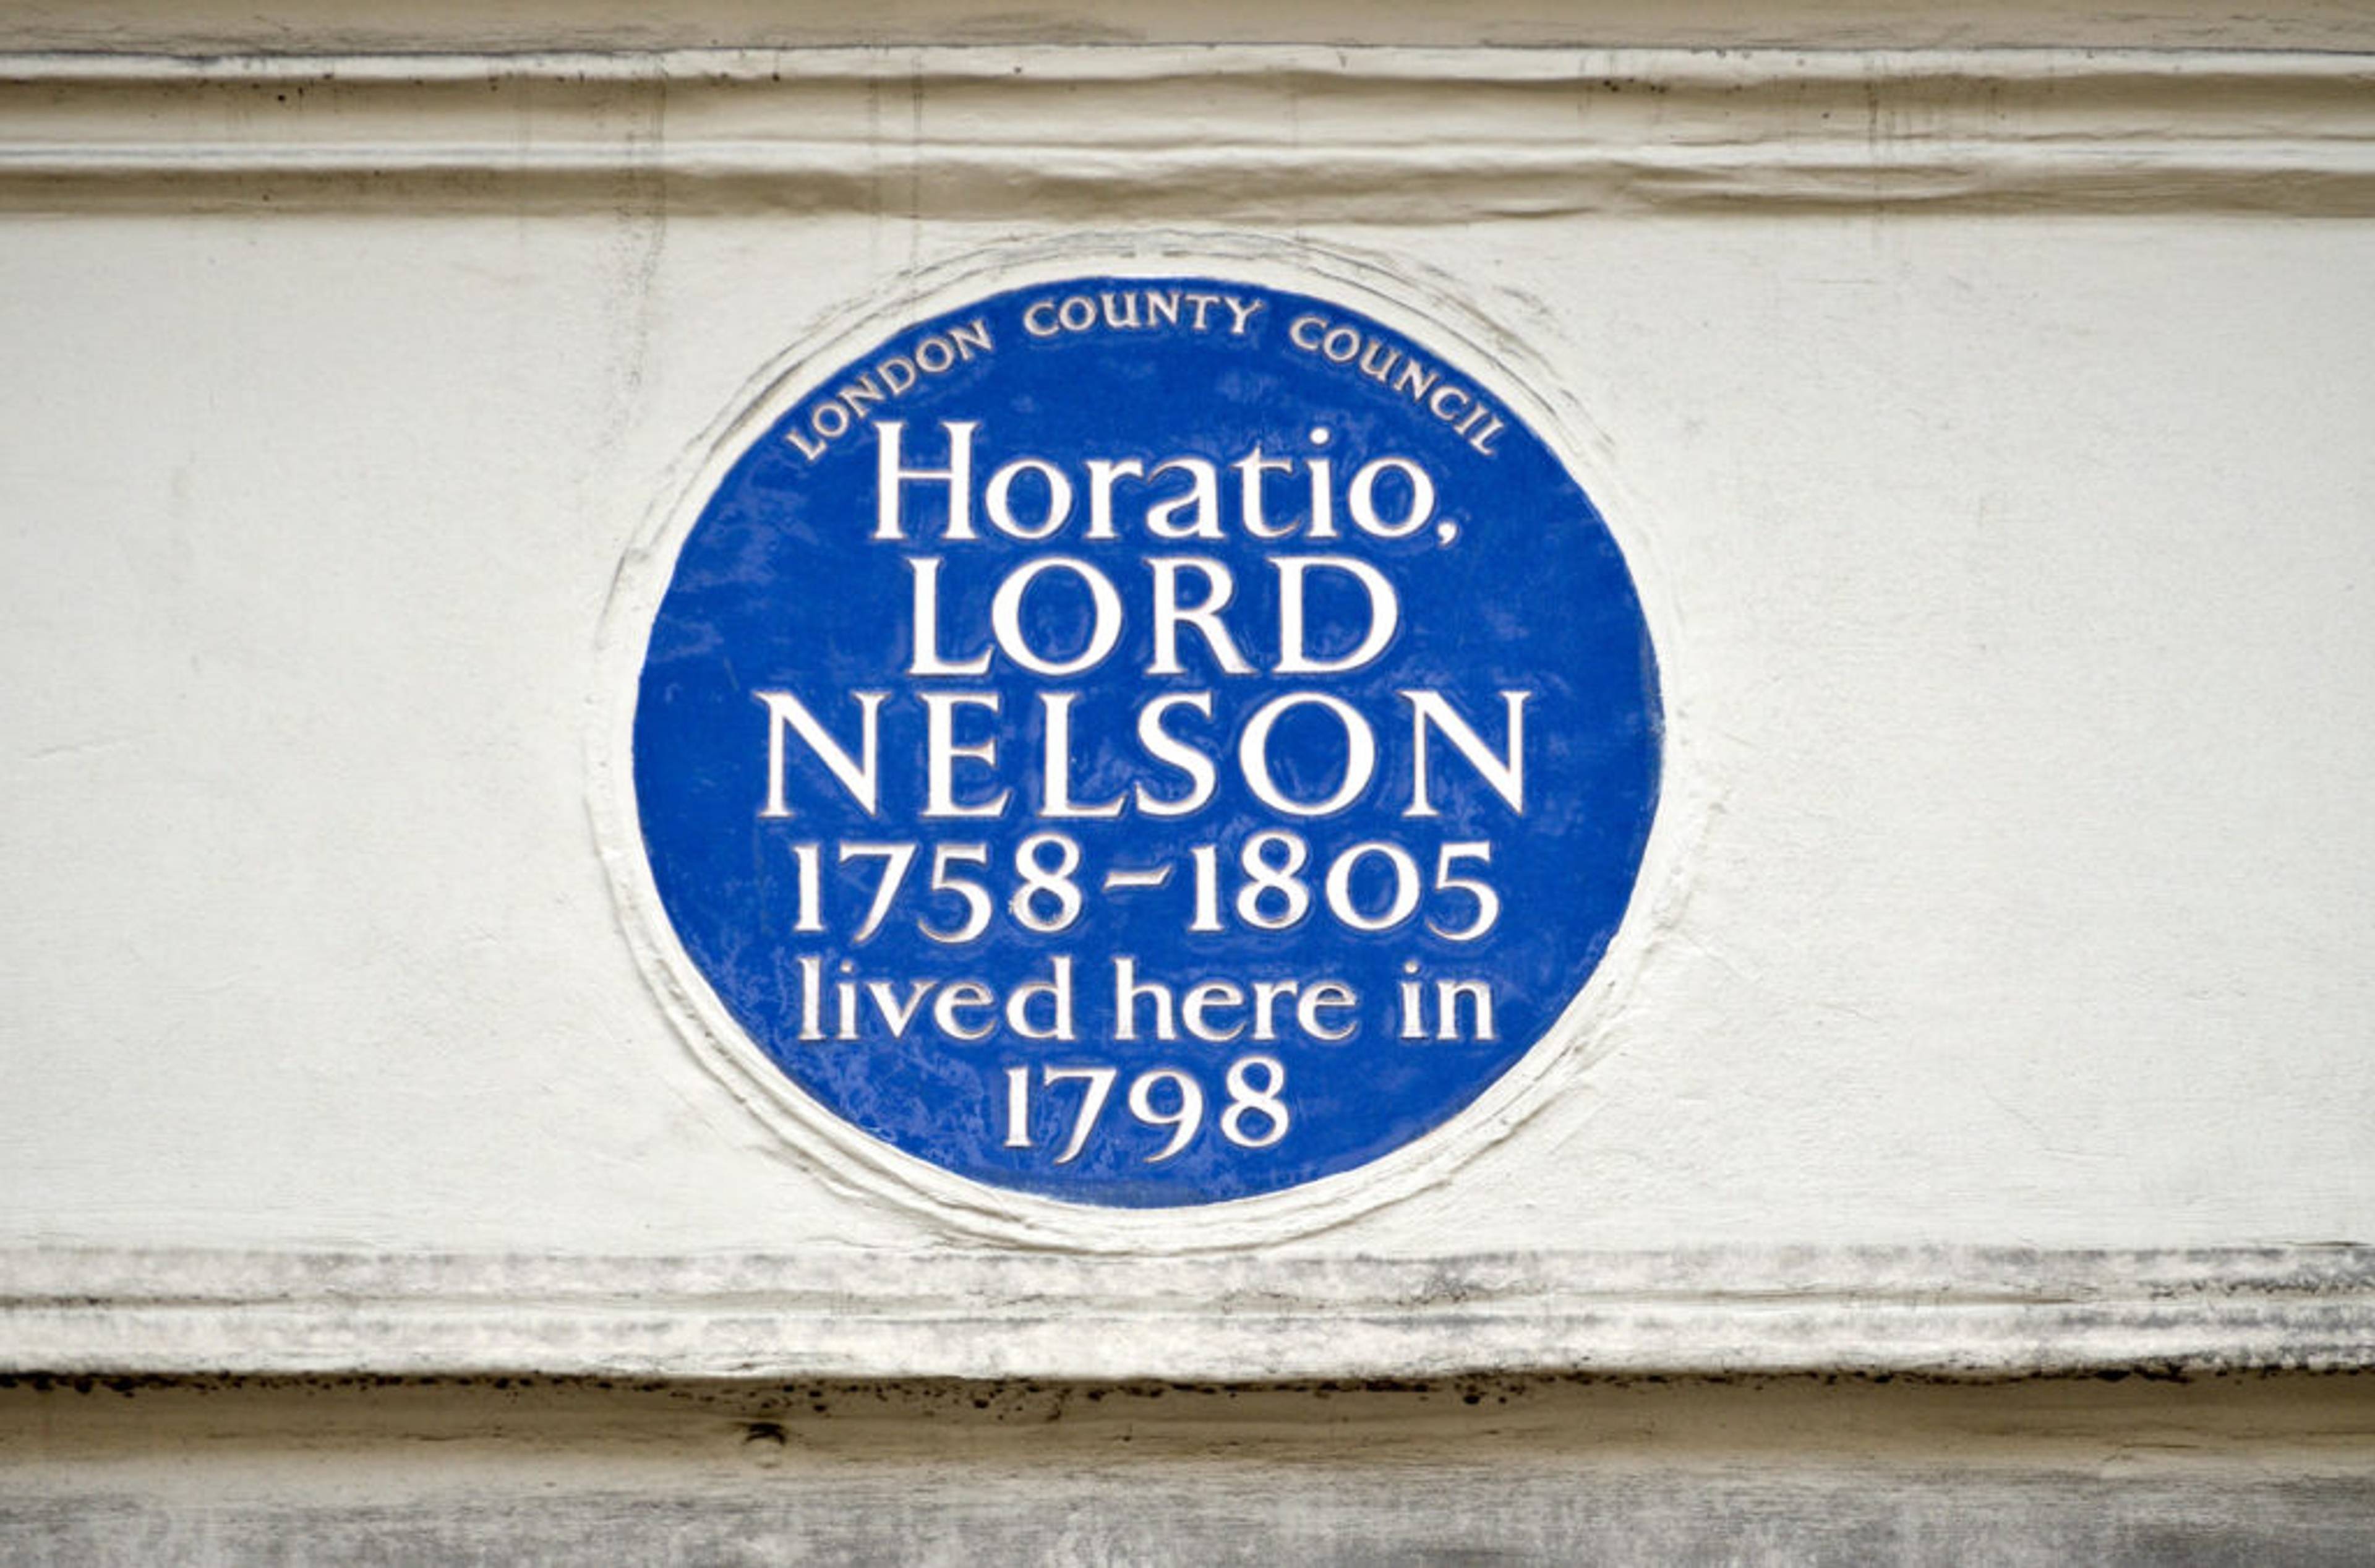 Nelson's house on New Bond Street